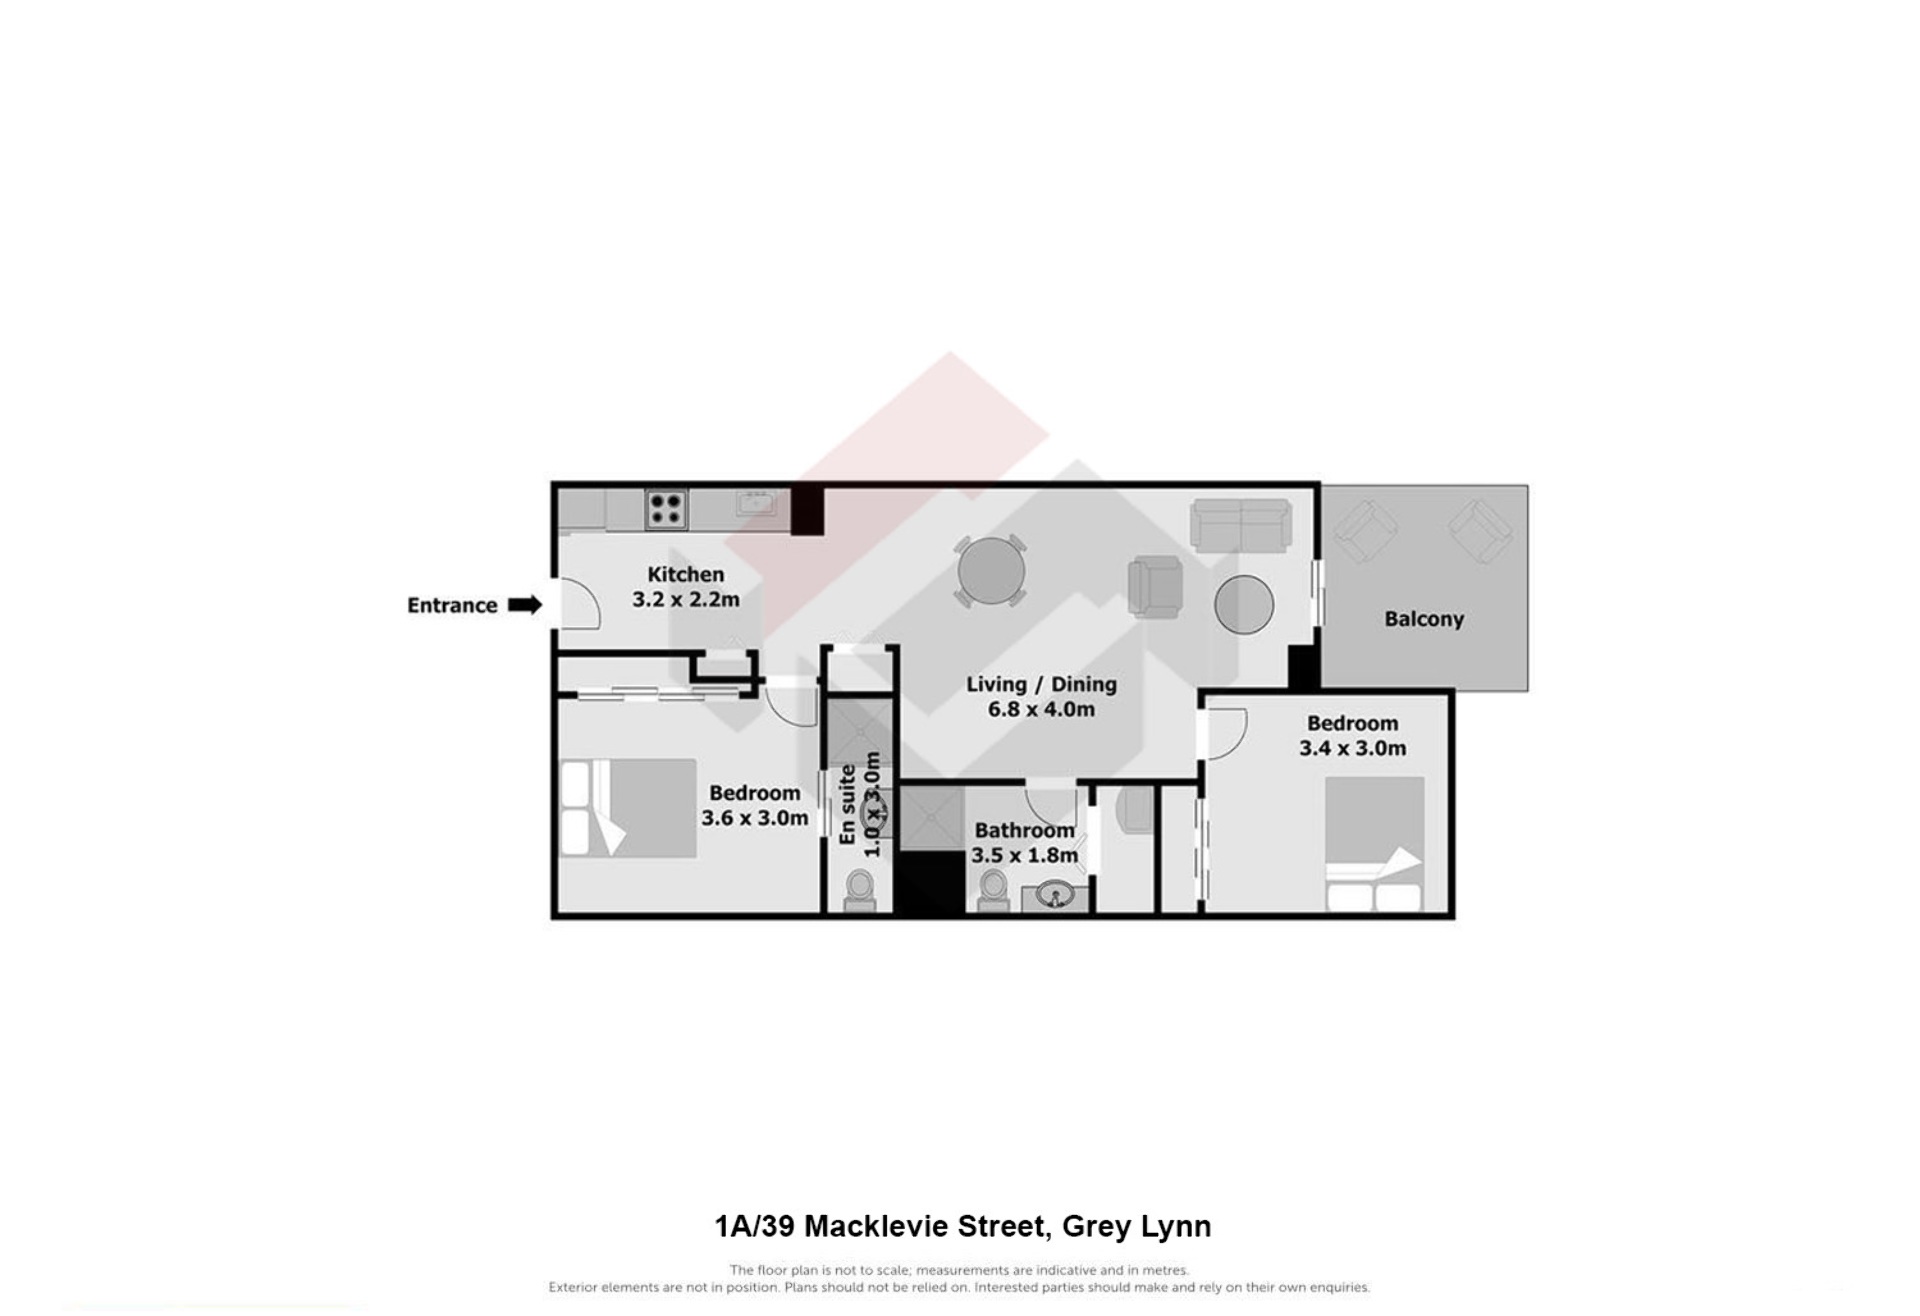 16 | 39 Mackelvie Street, Grey Lynn | Apartment Specialists